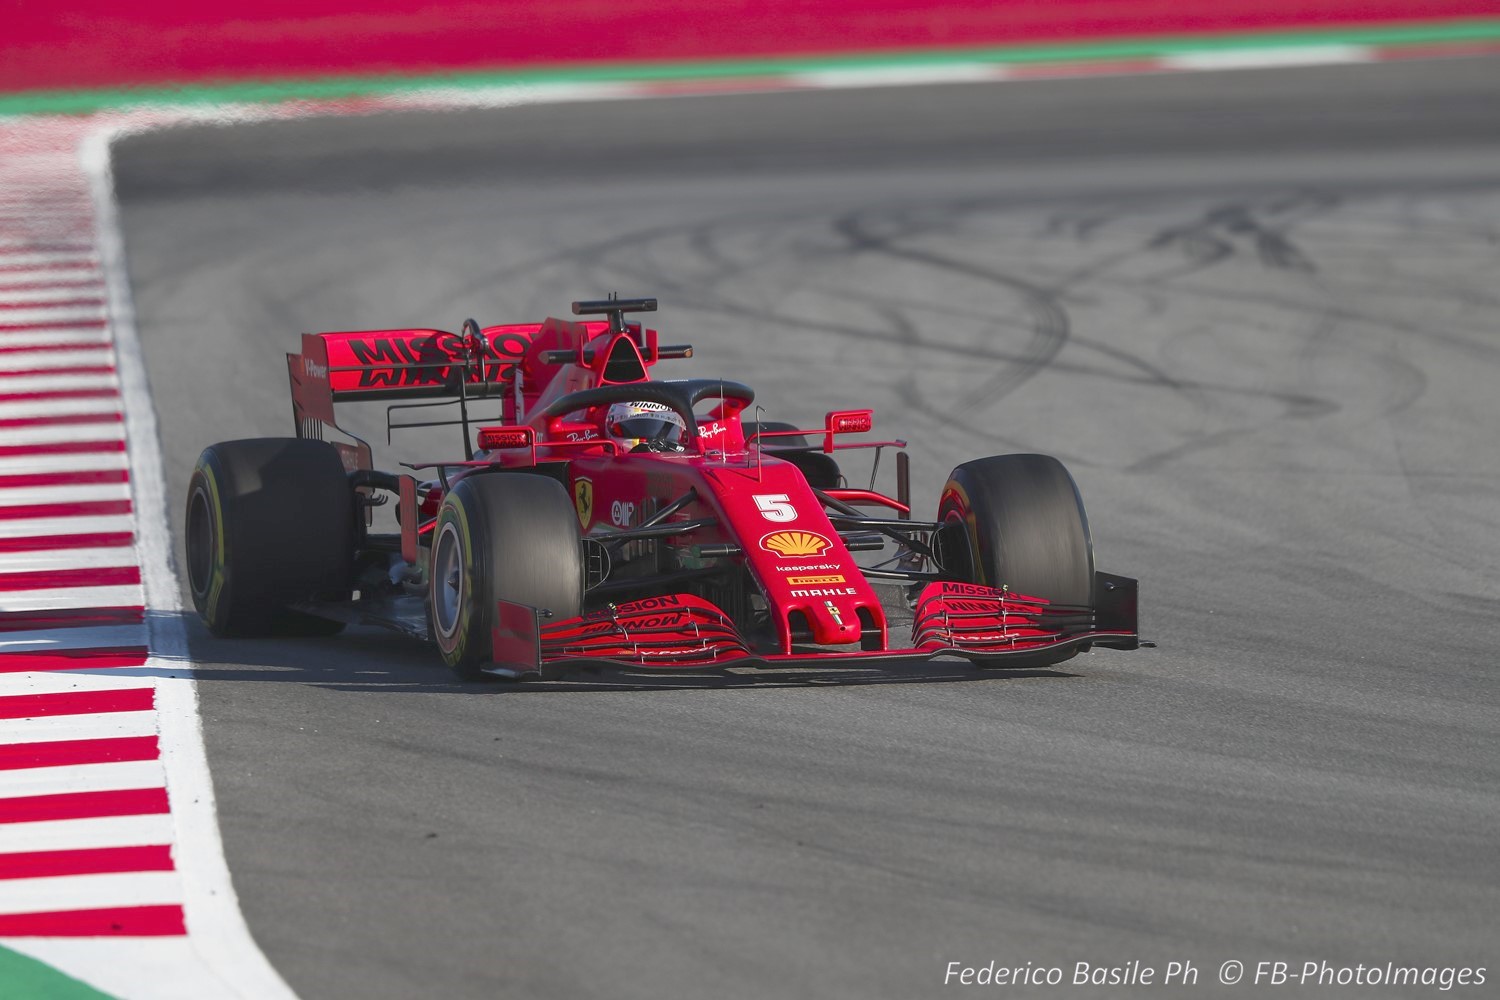 Vettel in the simplistic (compared to the Mercedes) and so far slow Ferrari